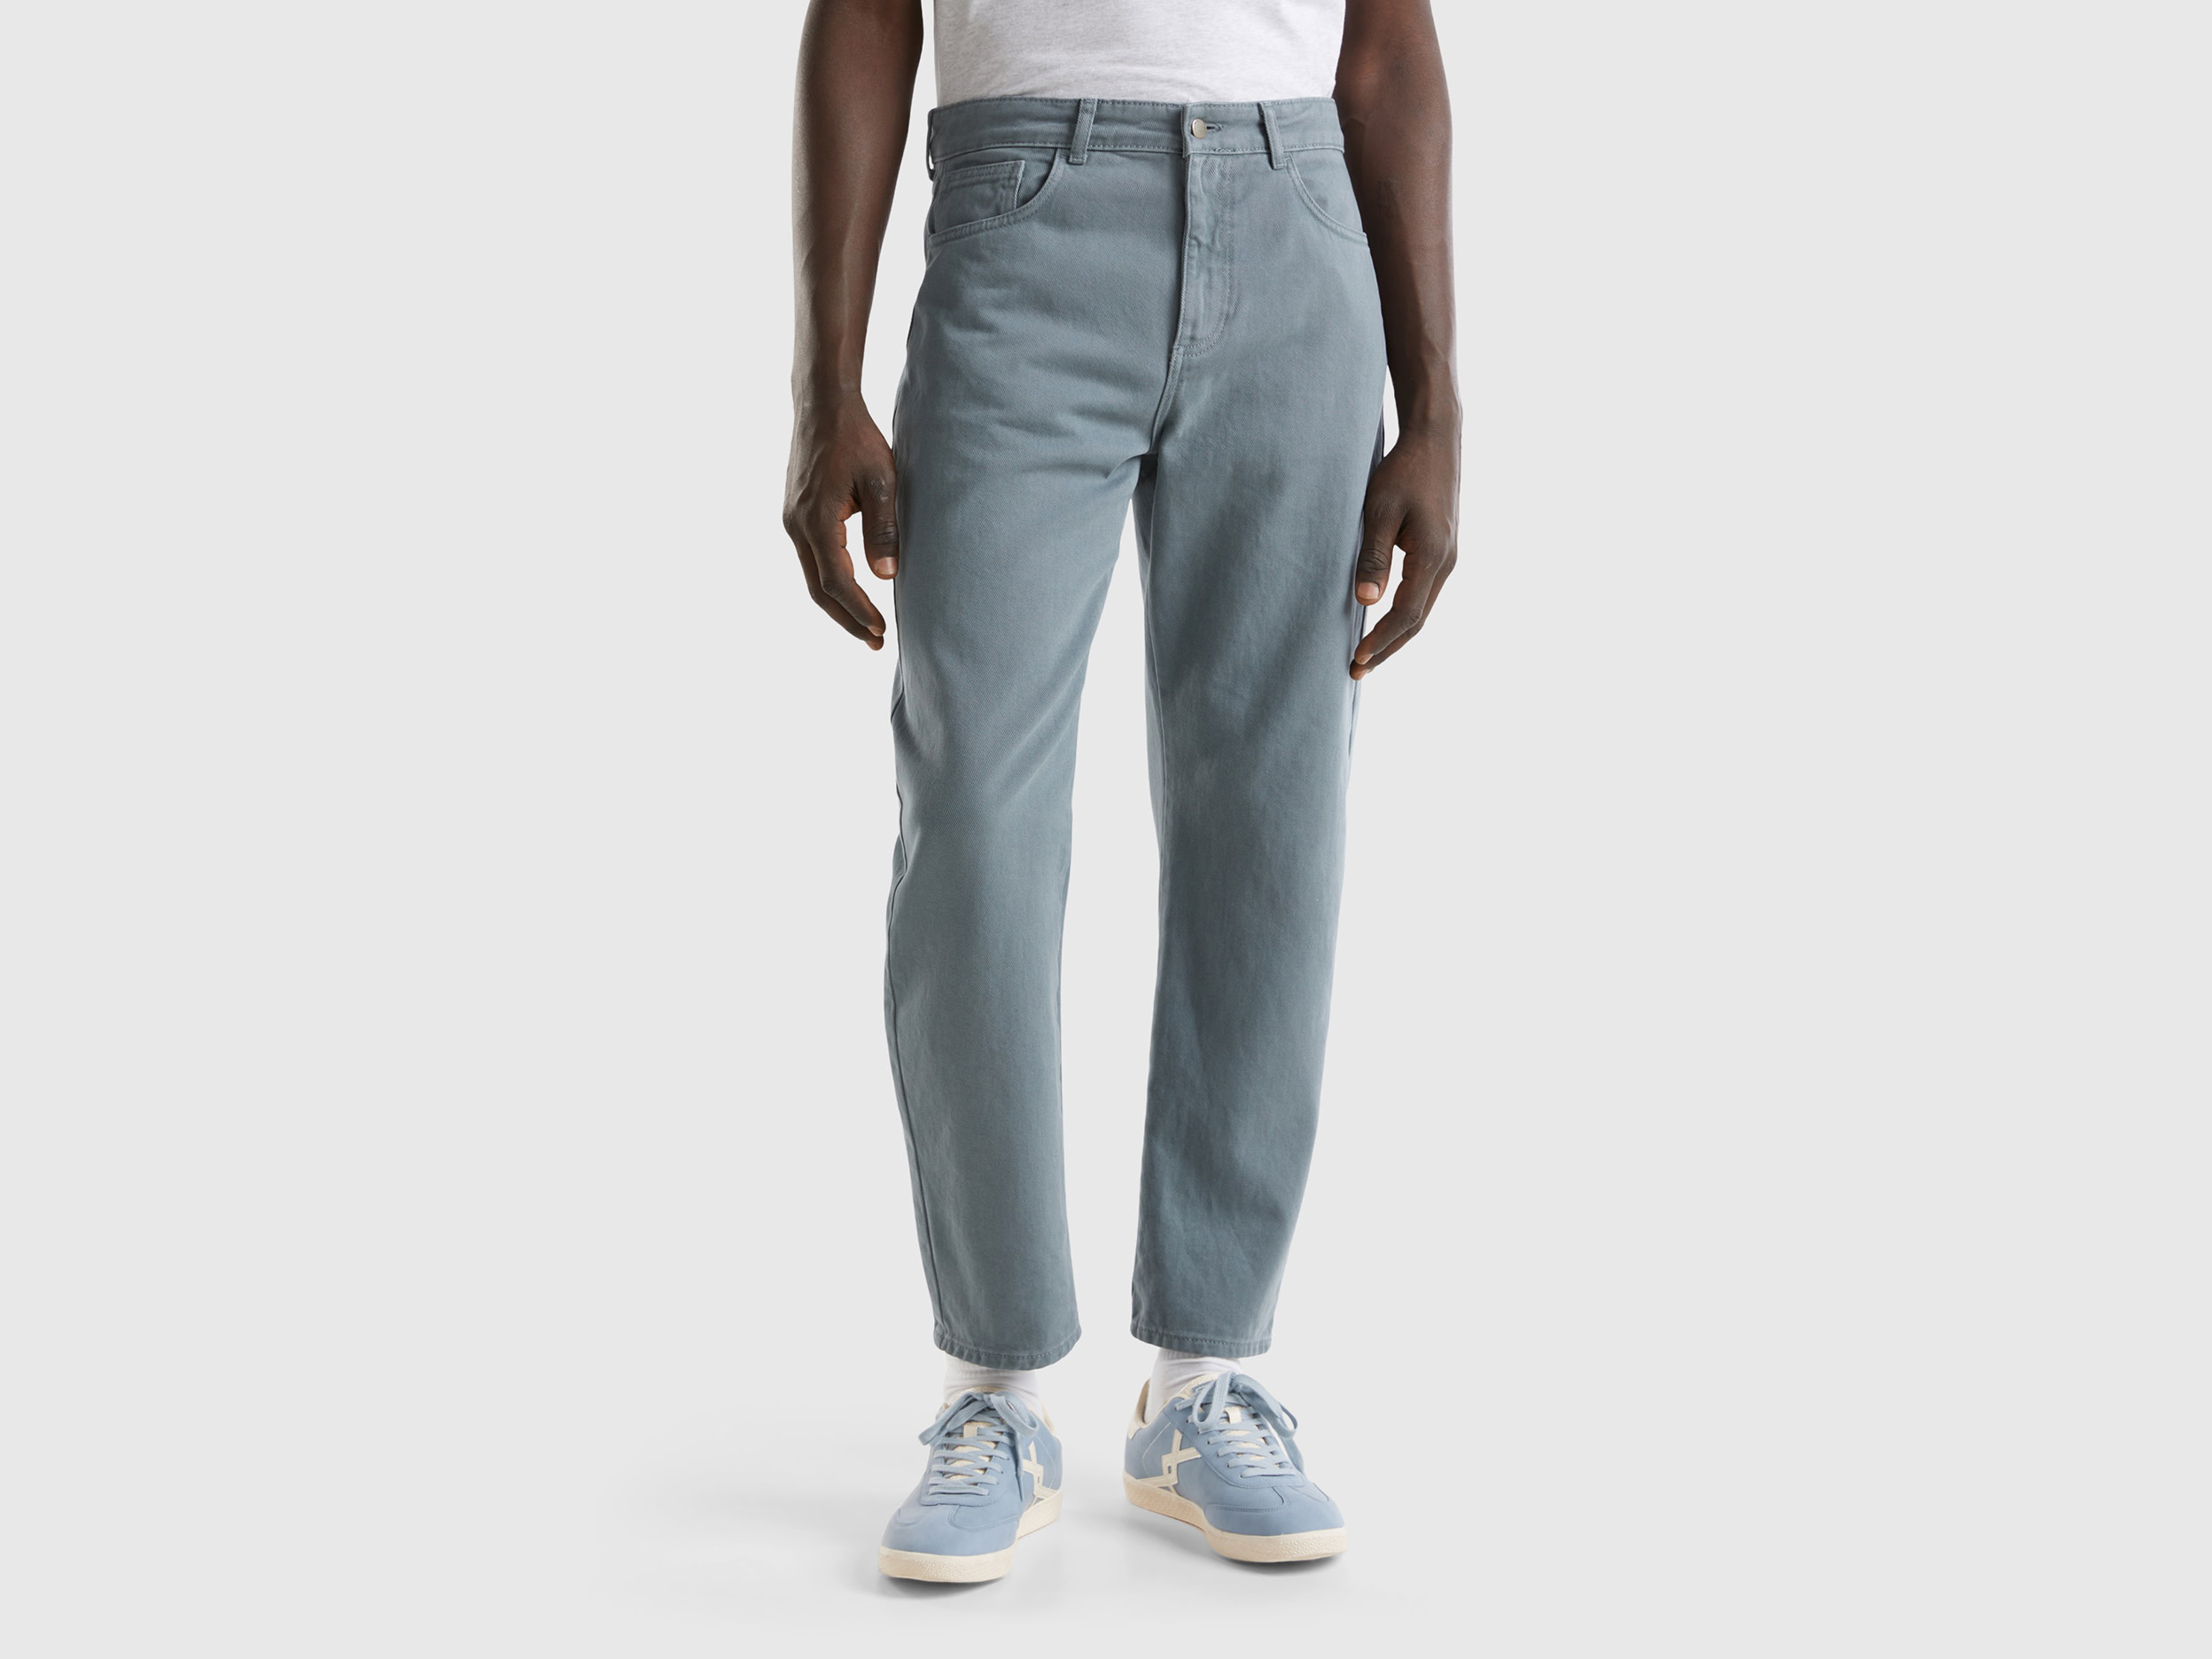 Benetton, Five Pocket Carrot Fit Trousers, size 28, Light Gray, Men